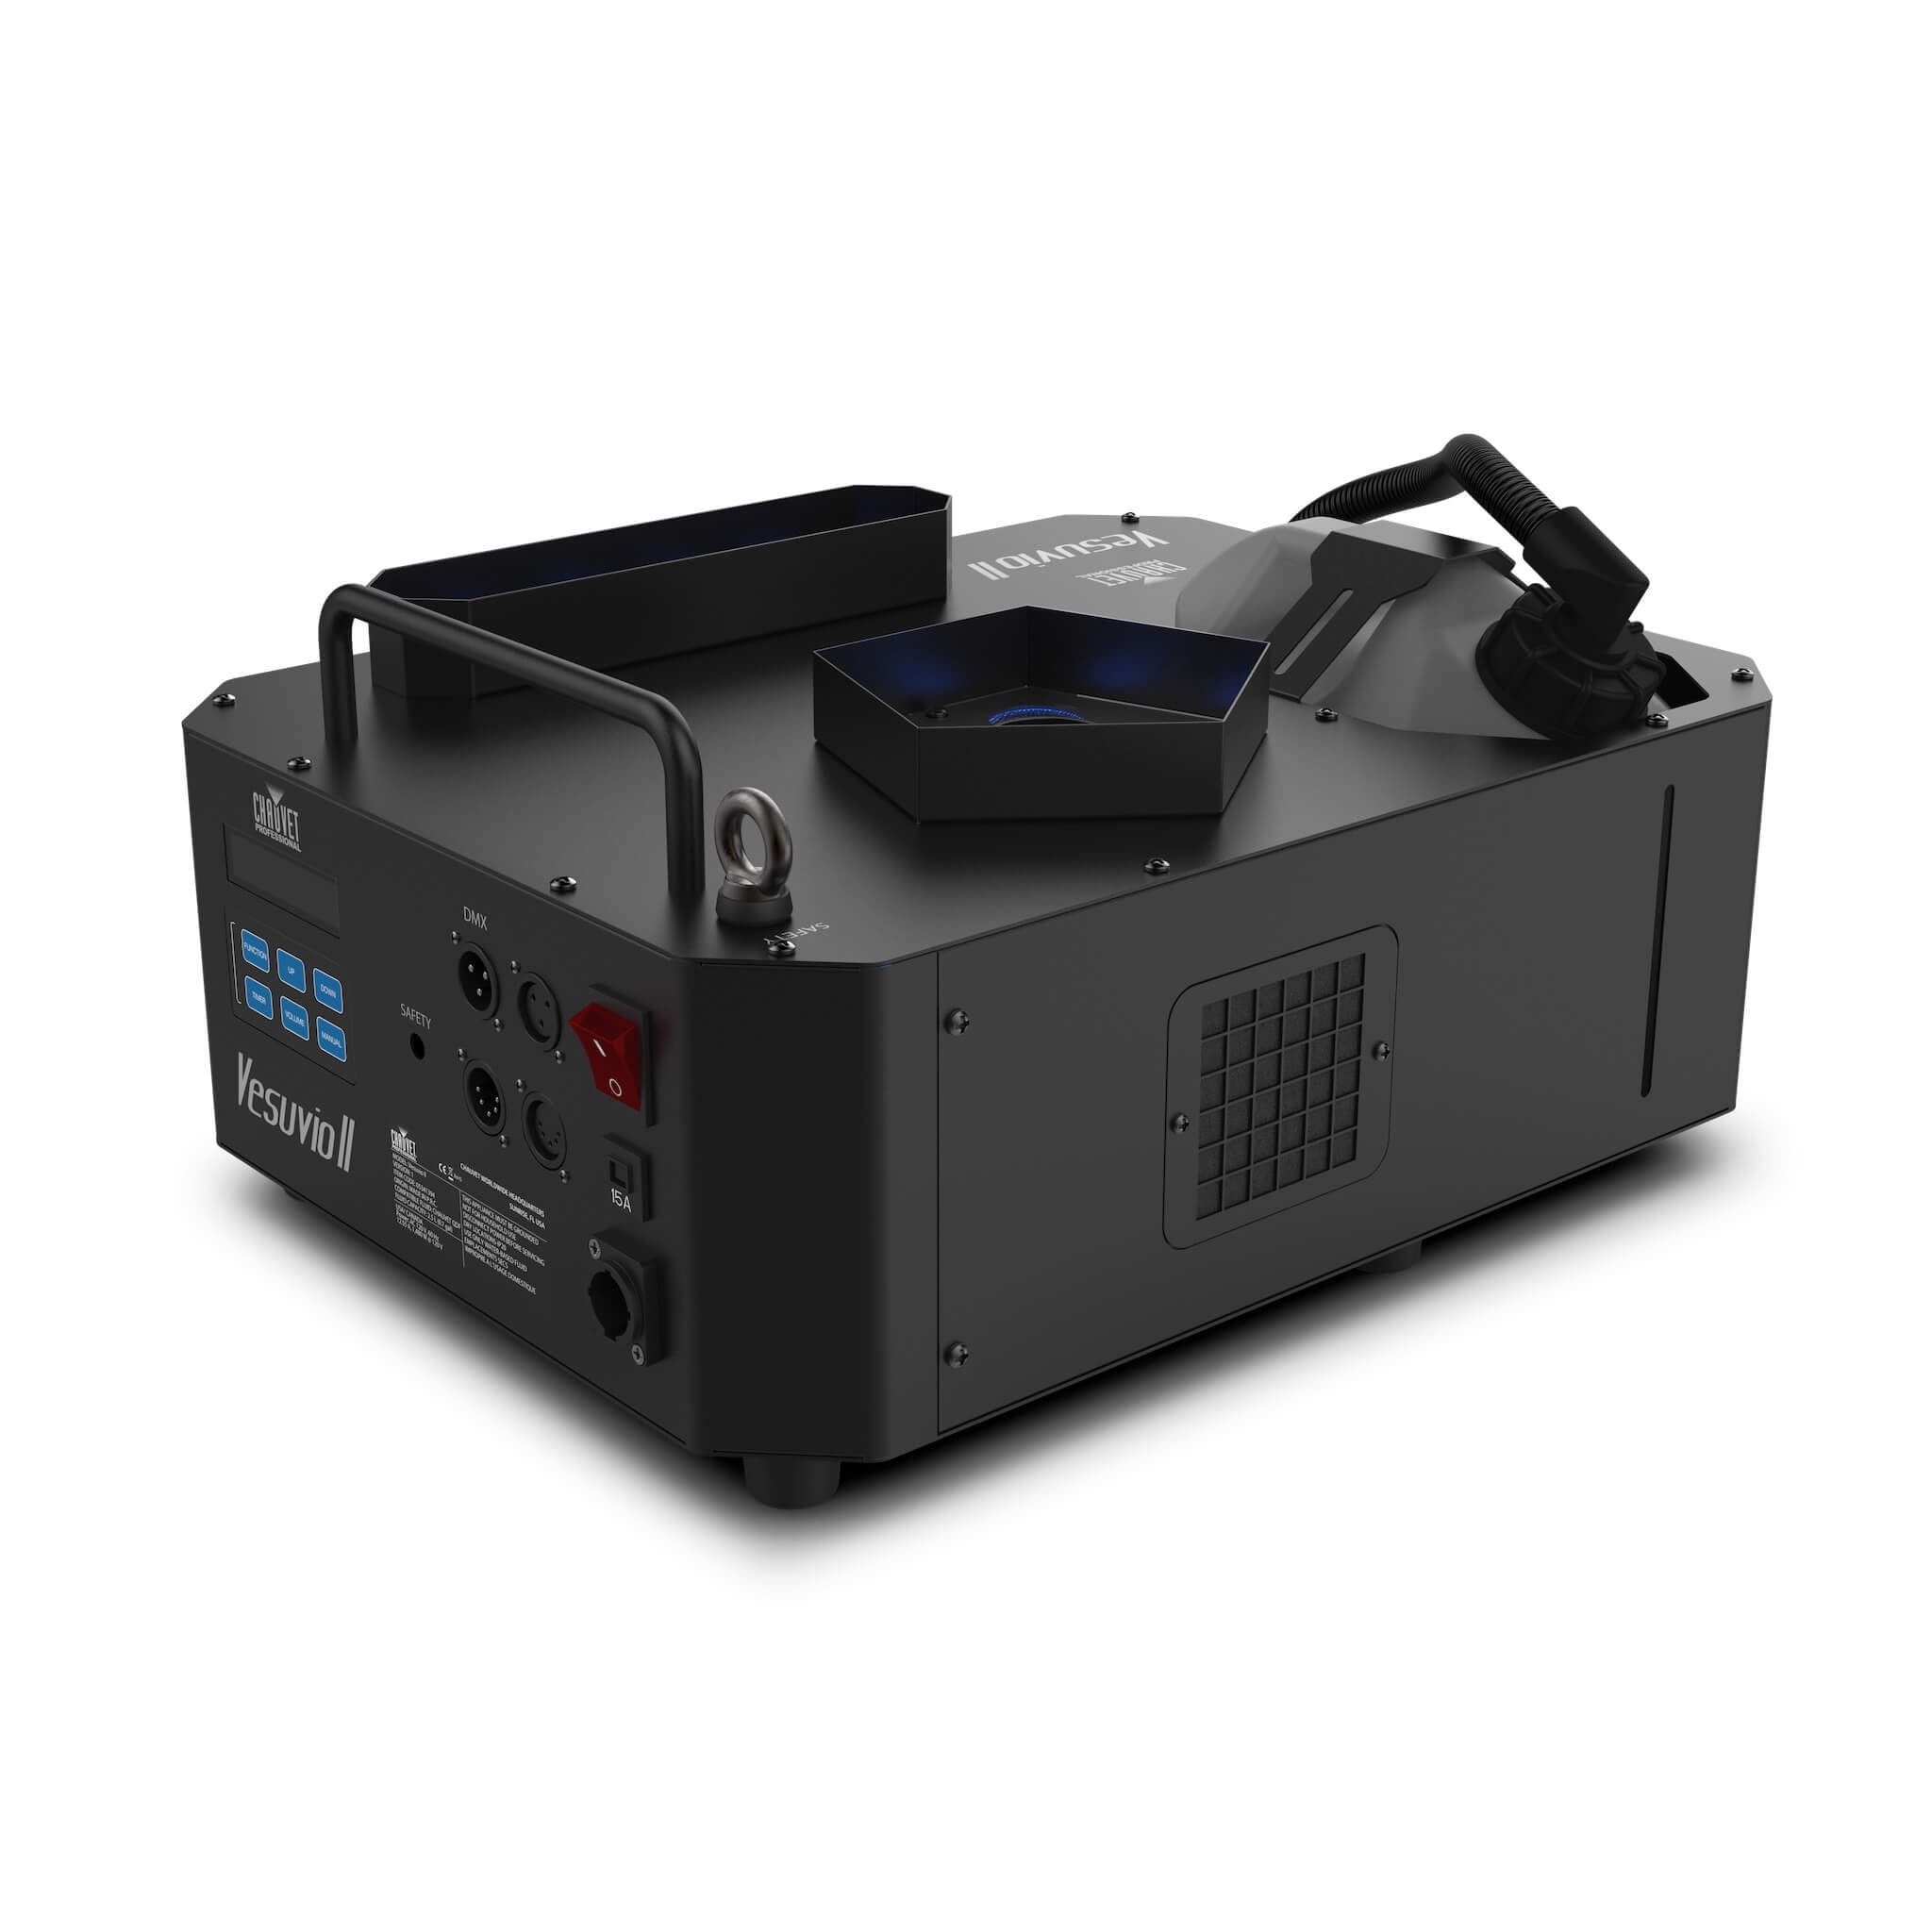 Chauvet Professional Vesuvio II - RGBA+UV LED Water Based Fog Machine, right